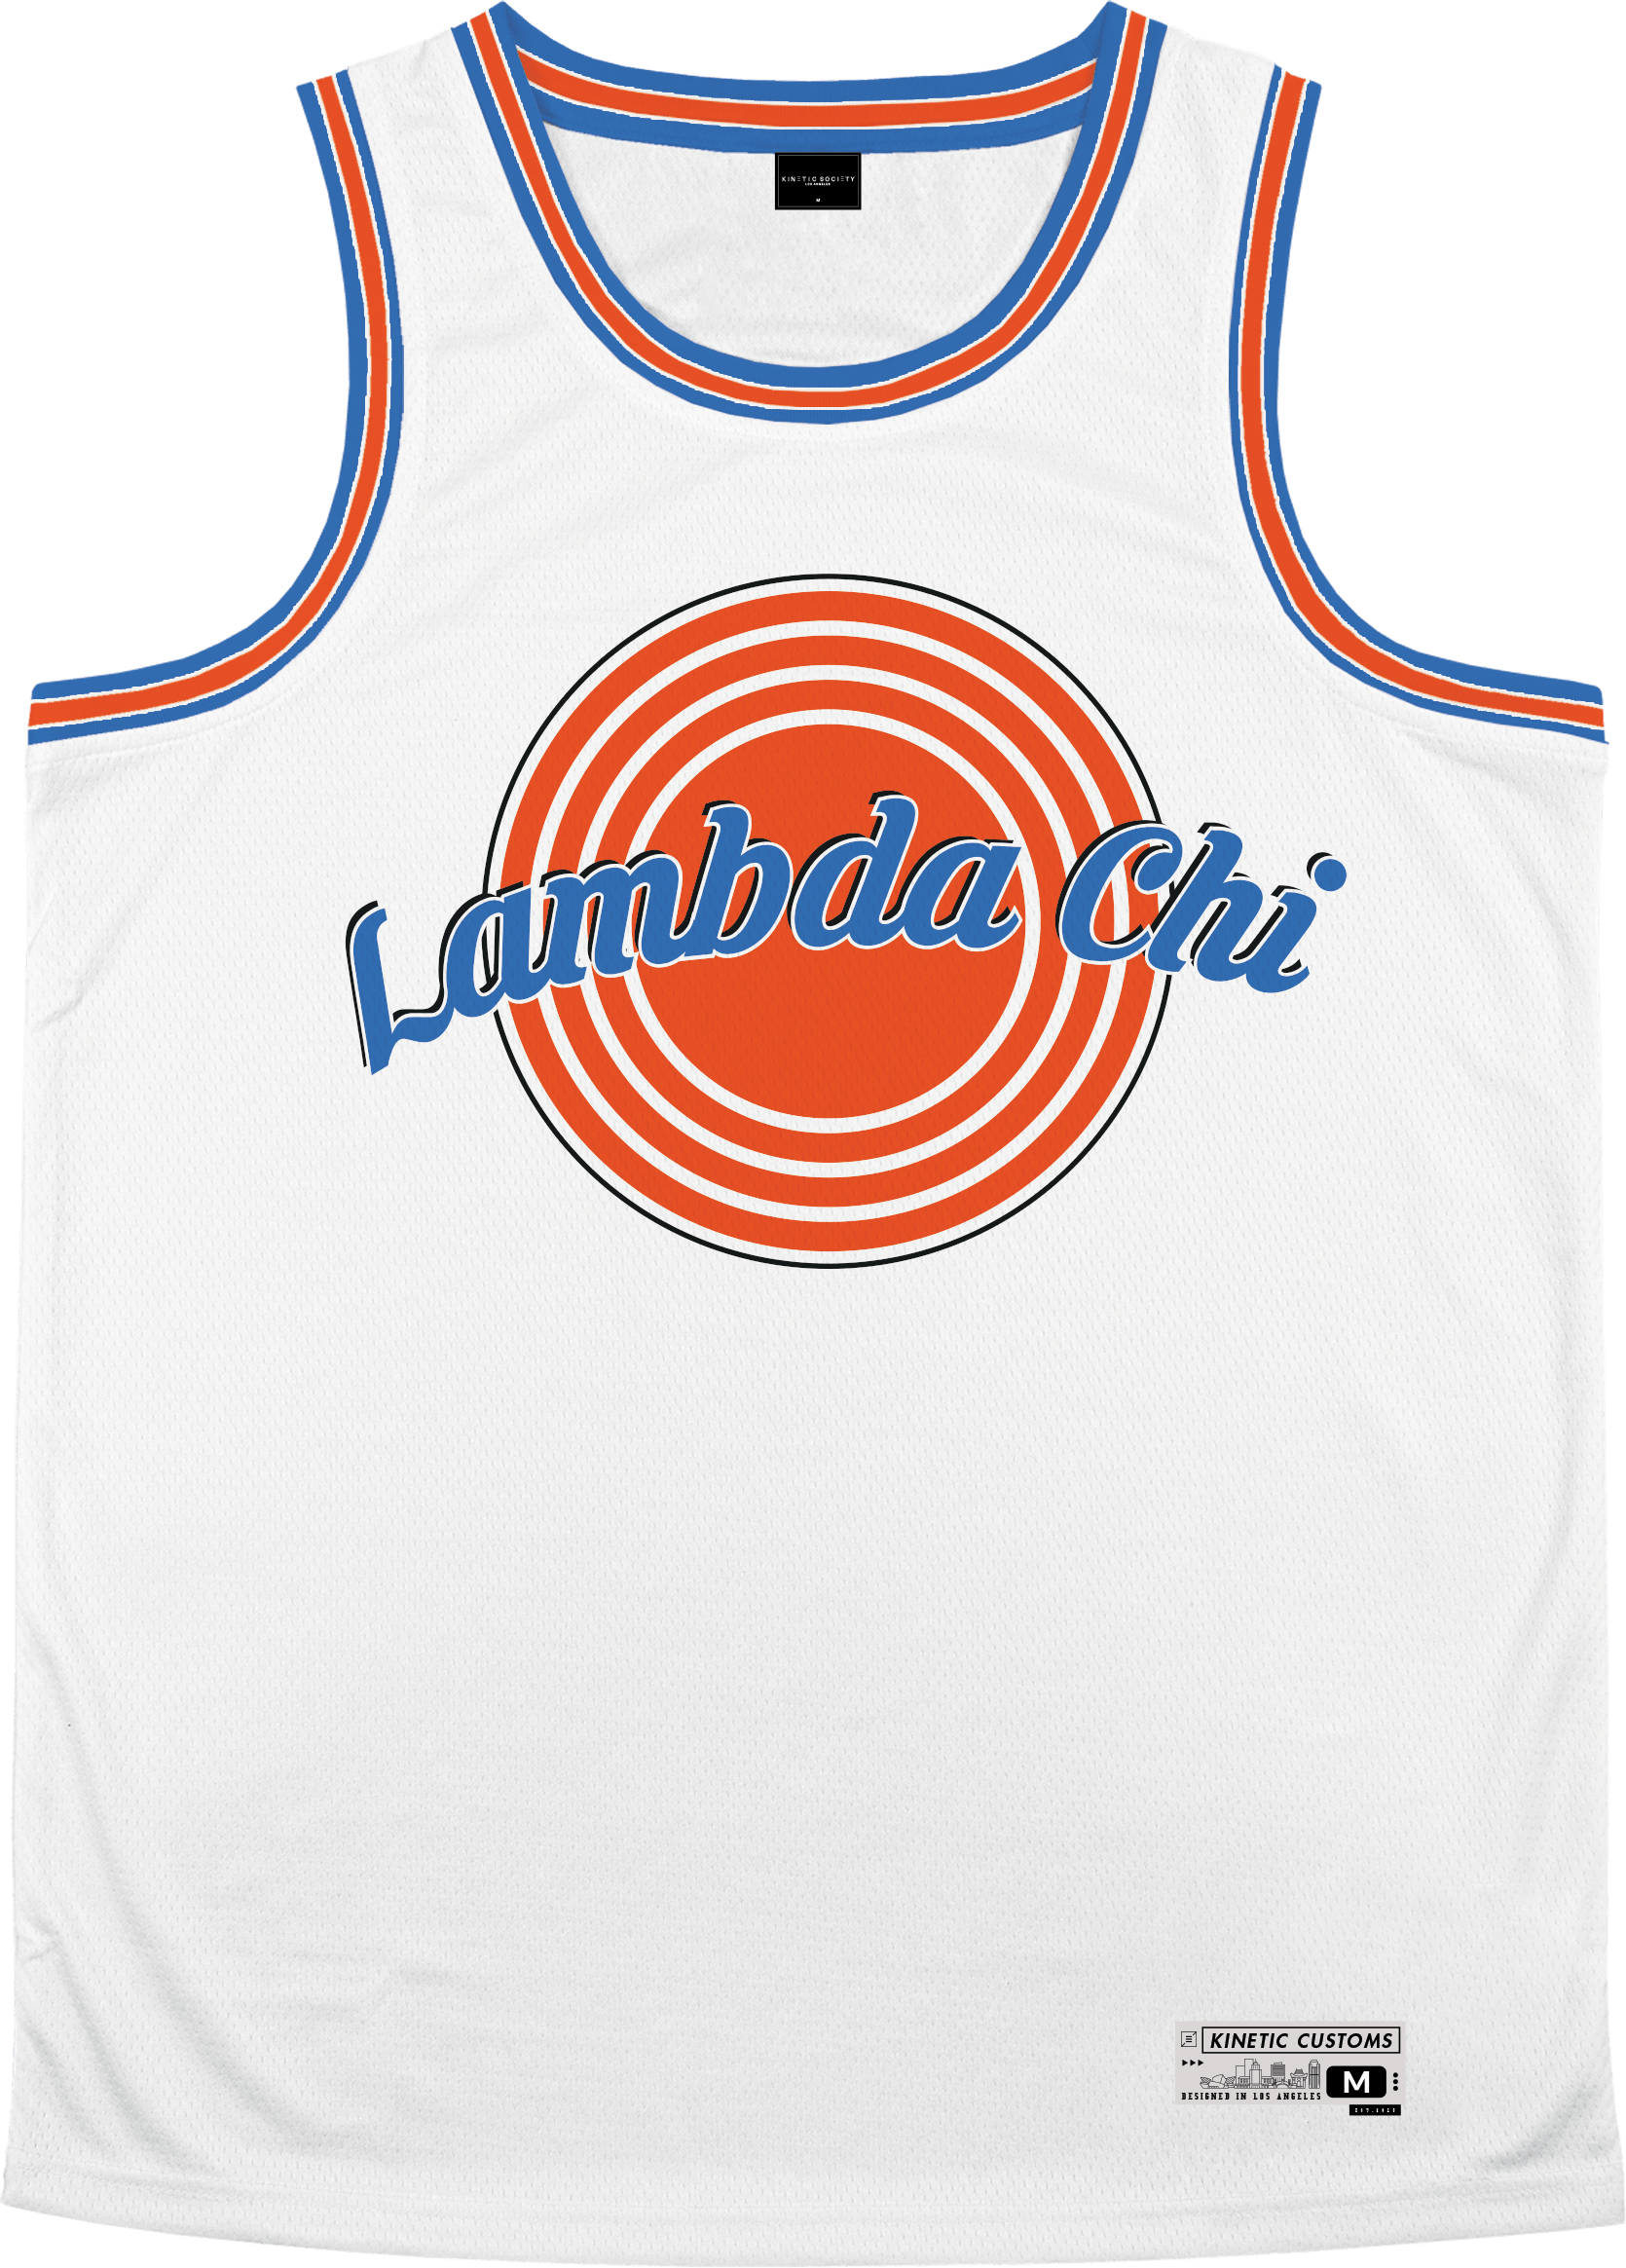 Lambda Chi Alpha - Vintage Basketball Jersey - Kinetic Society